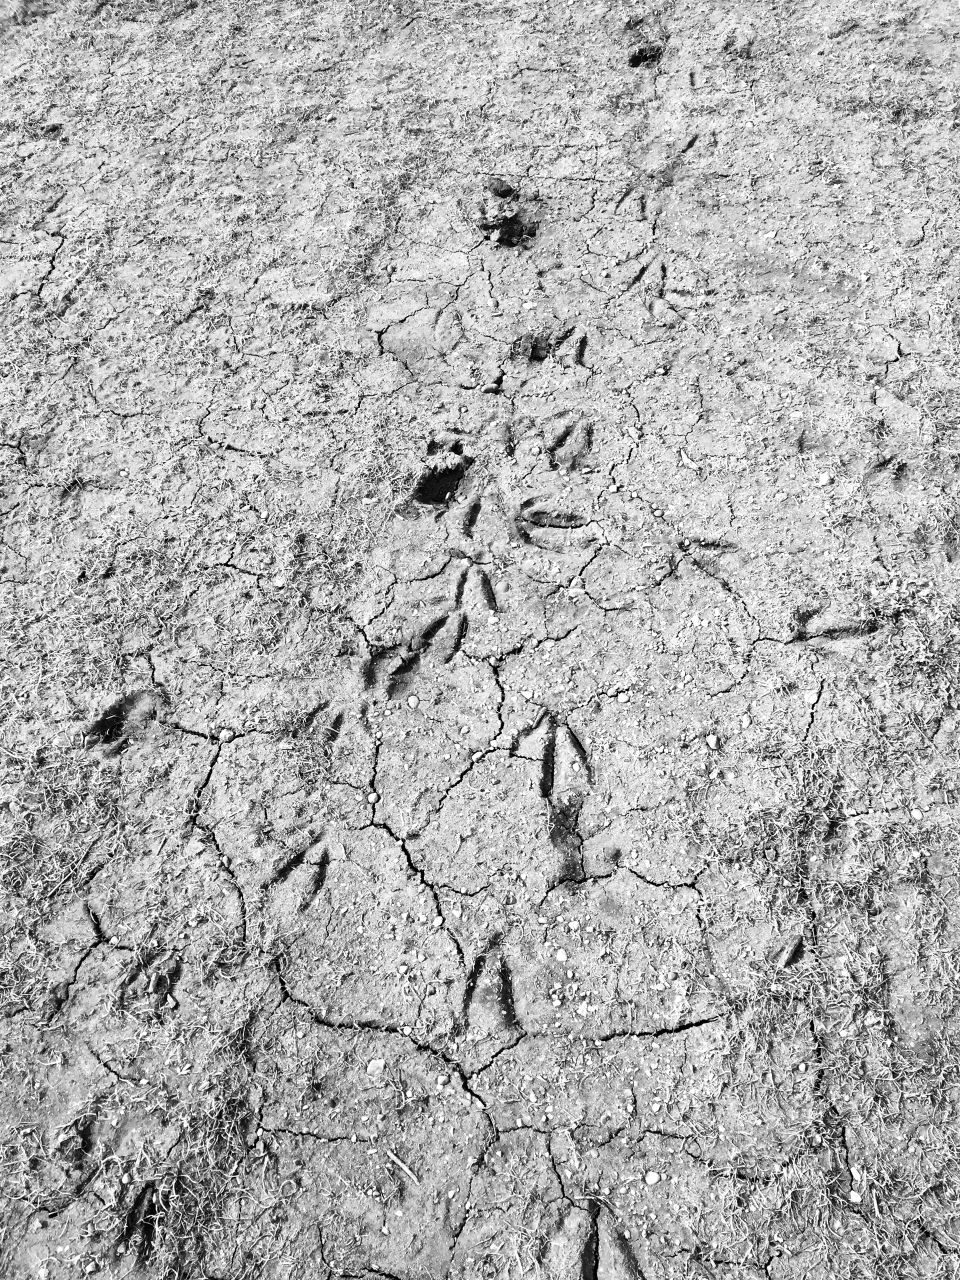 Geese tracks 